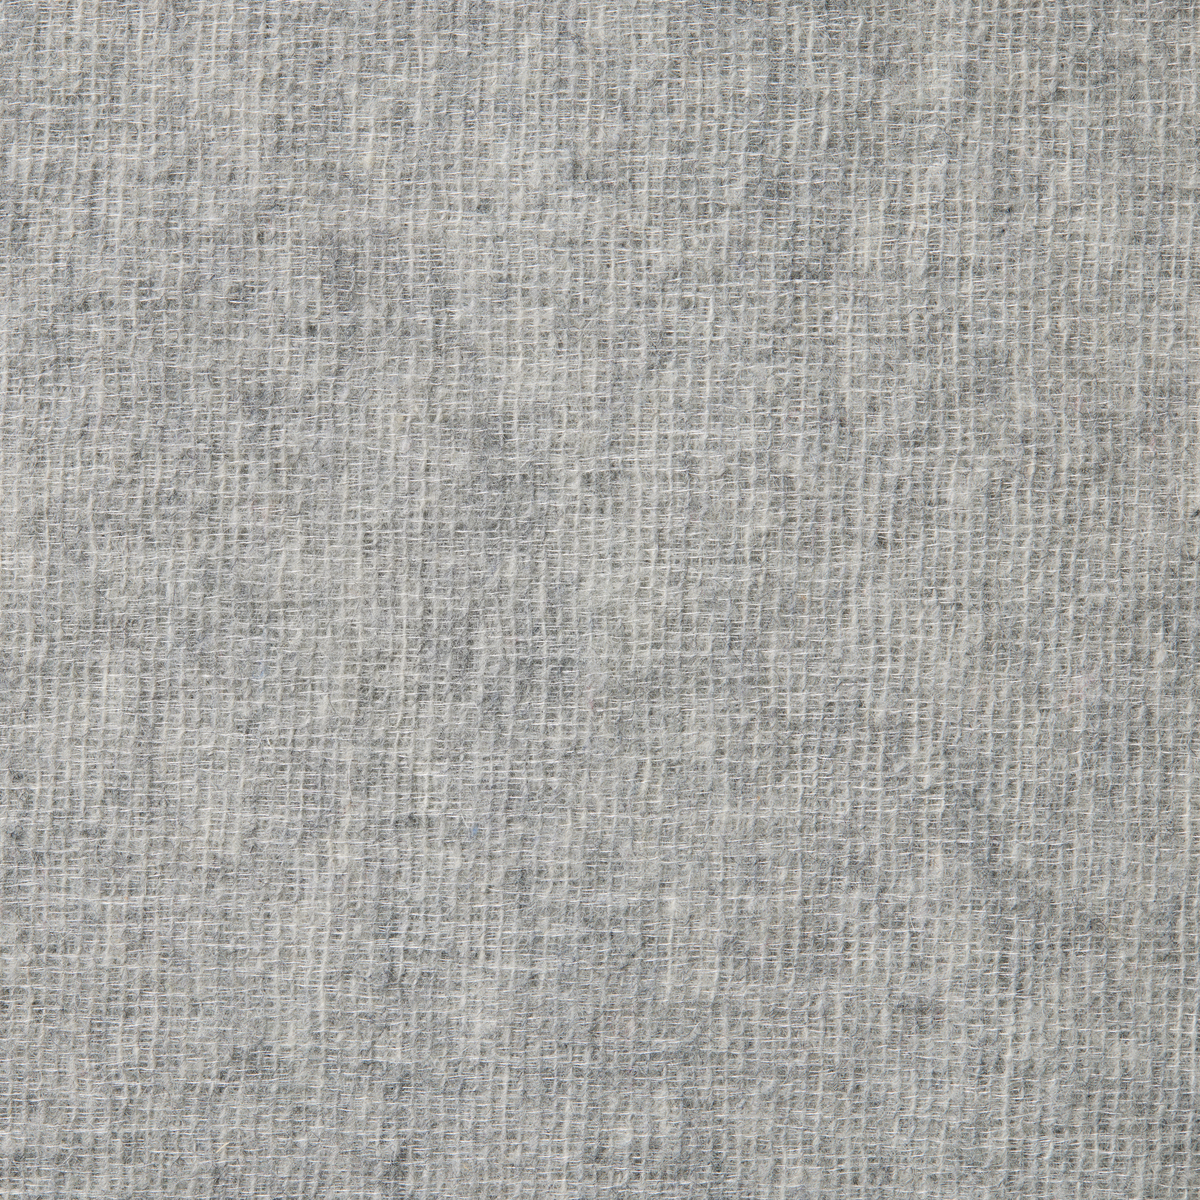 Swatch Sample of Sferra Monterosa Throws in Grey Color